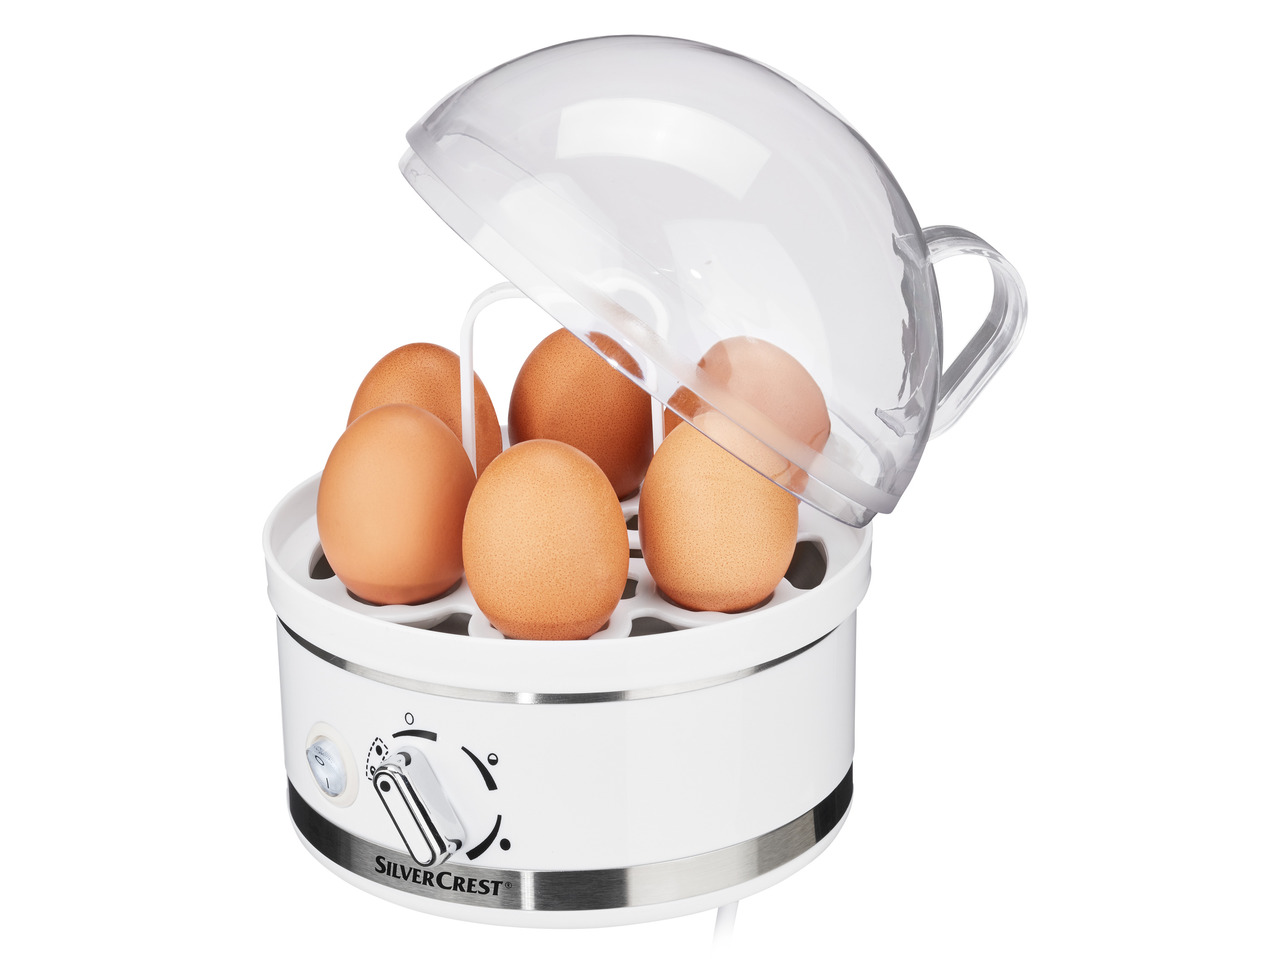 SILVERCREST KITCHEN TOOLS Egg Cooker